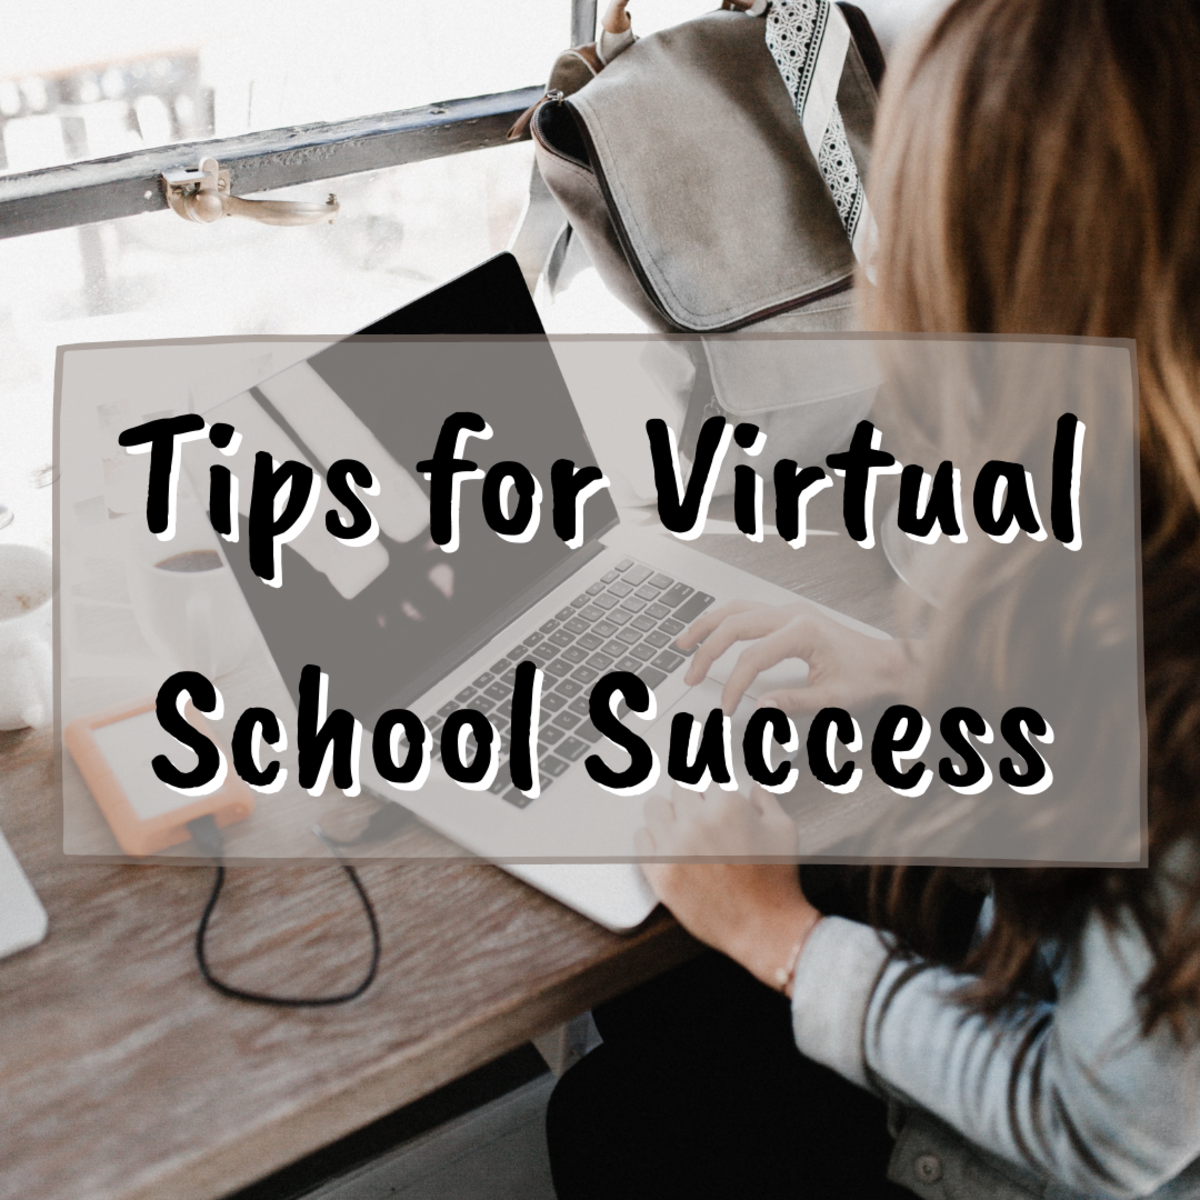 5 Tips for Virtual School Success